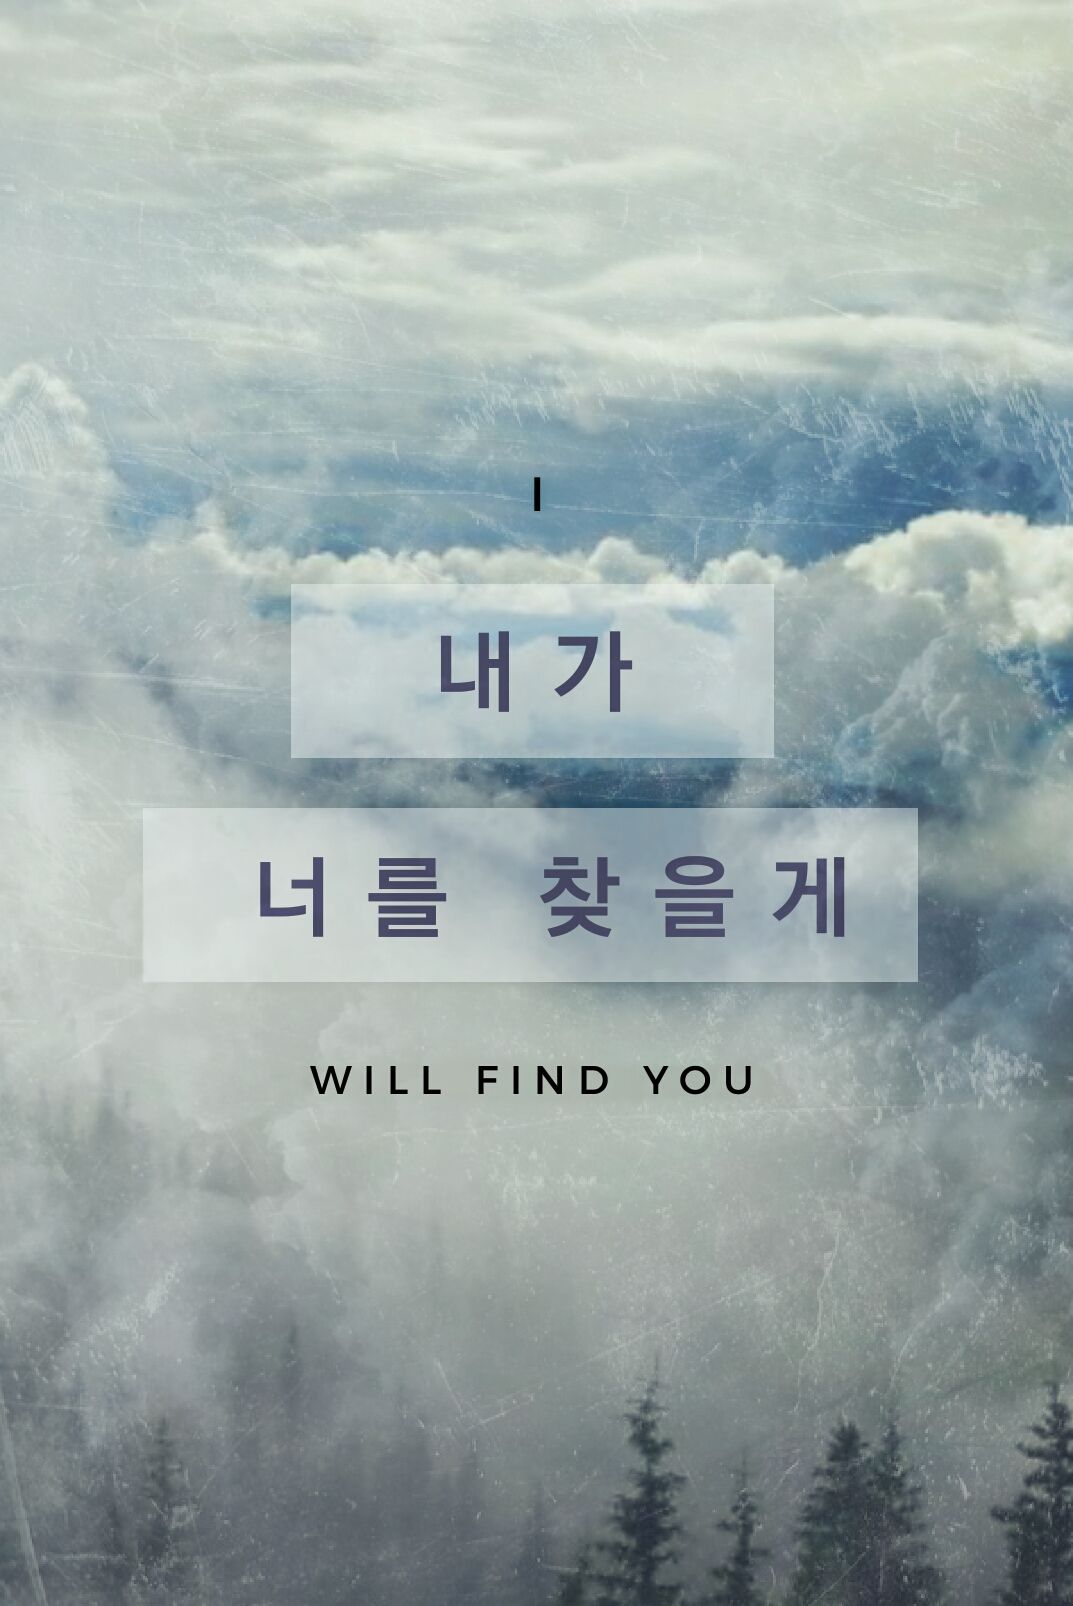 I will find you. in Korean 내가 너를 찾을게- Korean quotes wallpaper, lockscreen, romantic Korean phrases from webtoon. Korean quotes, Korean phrases, Korea quotes